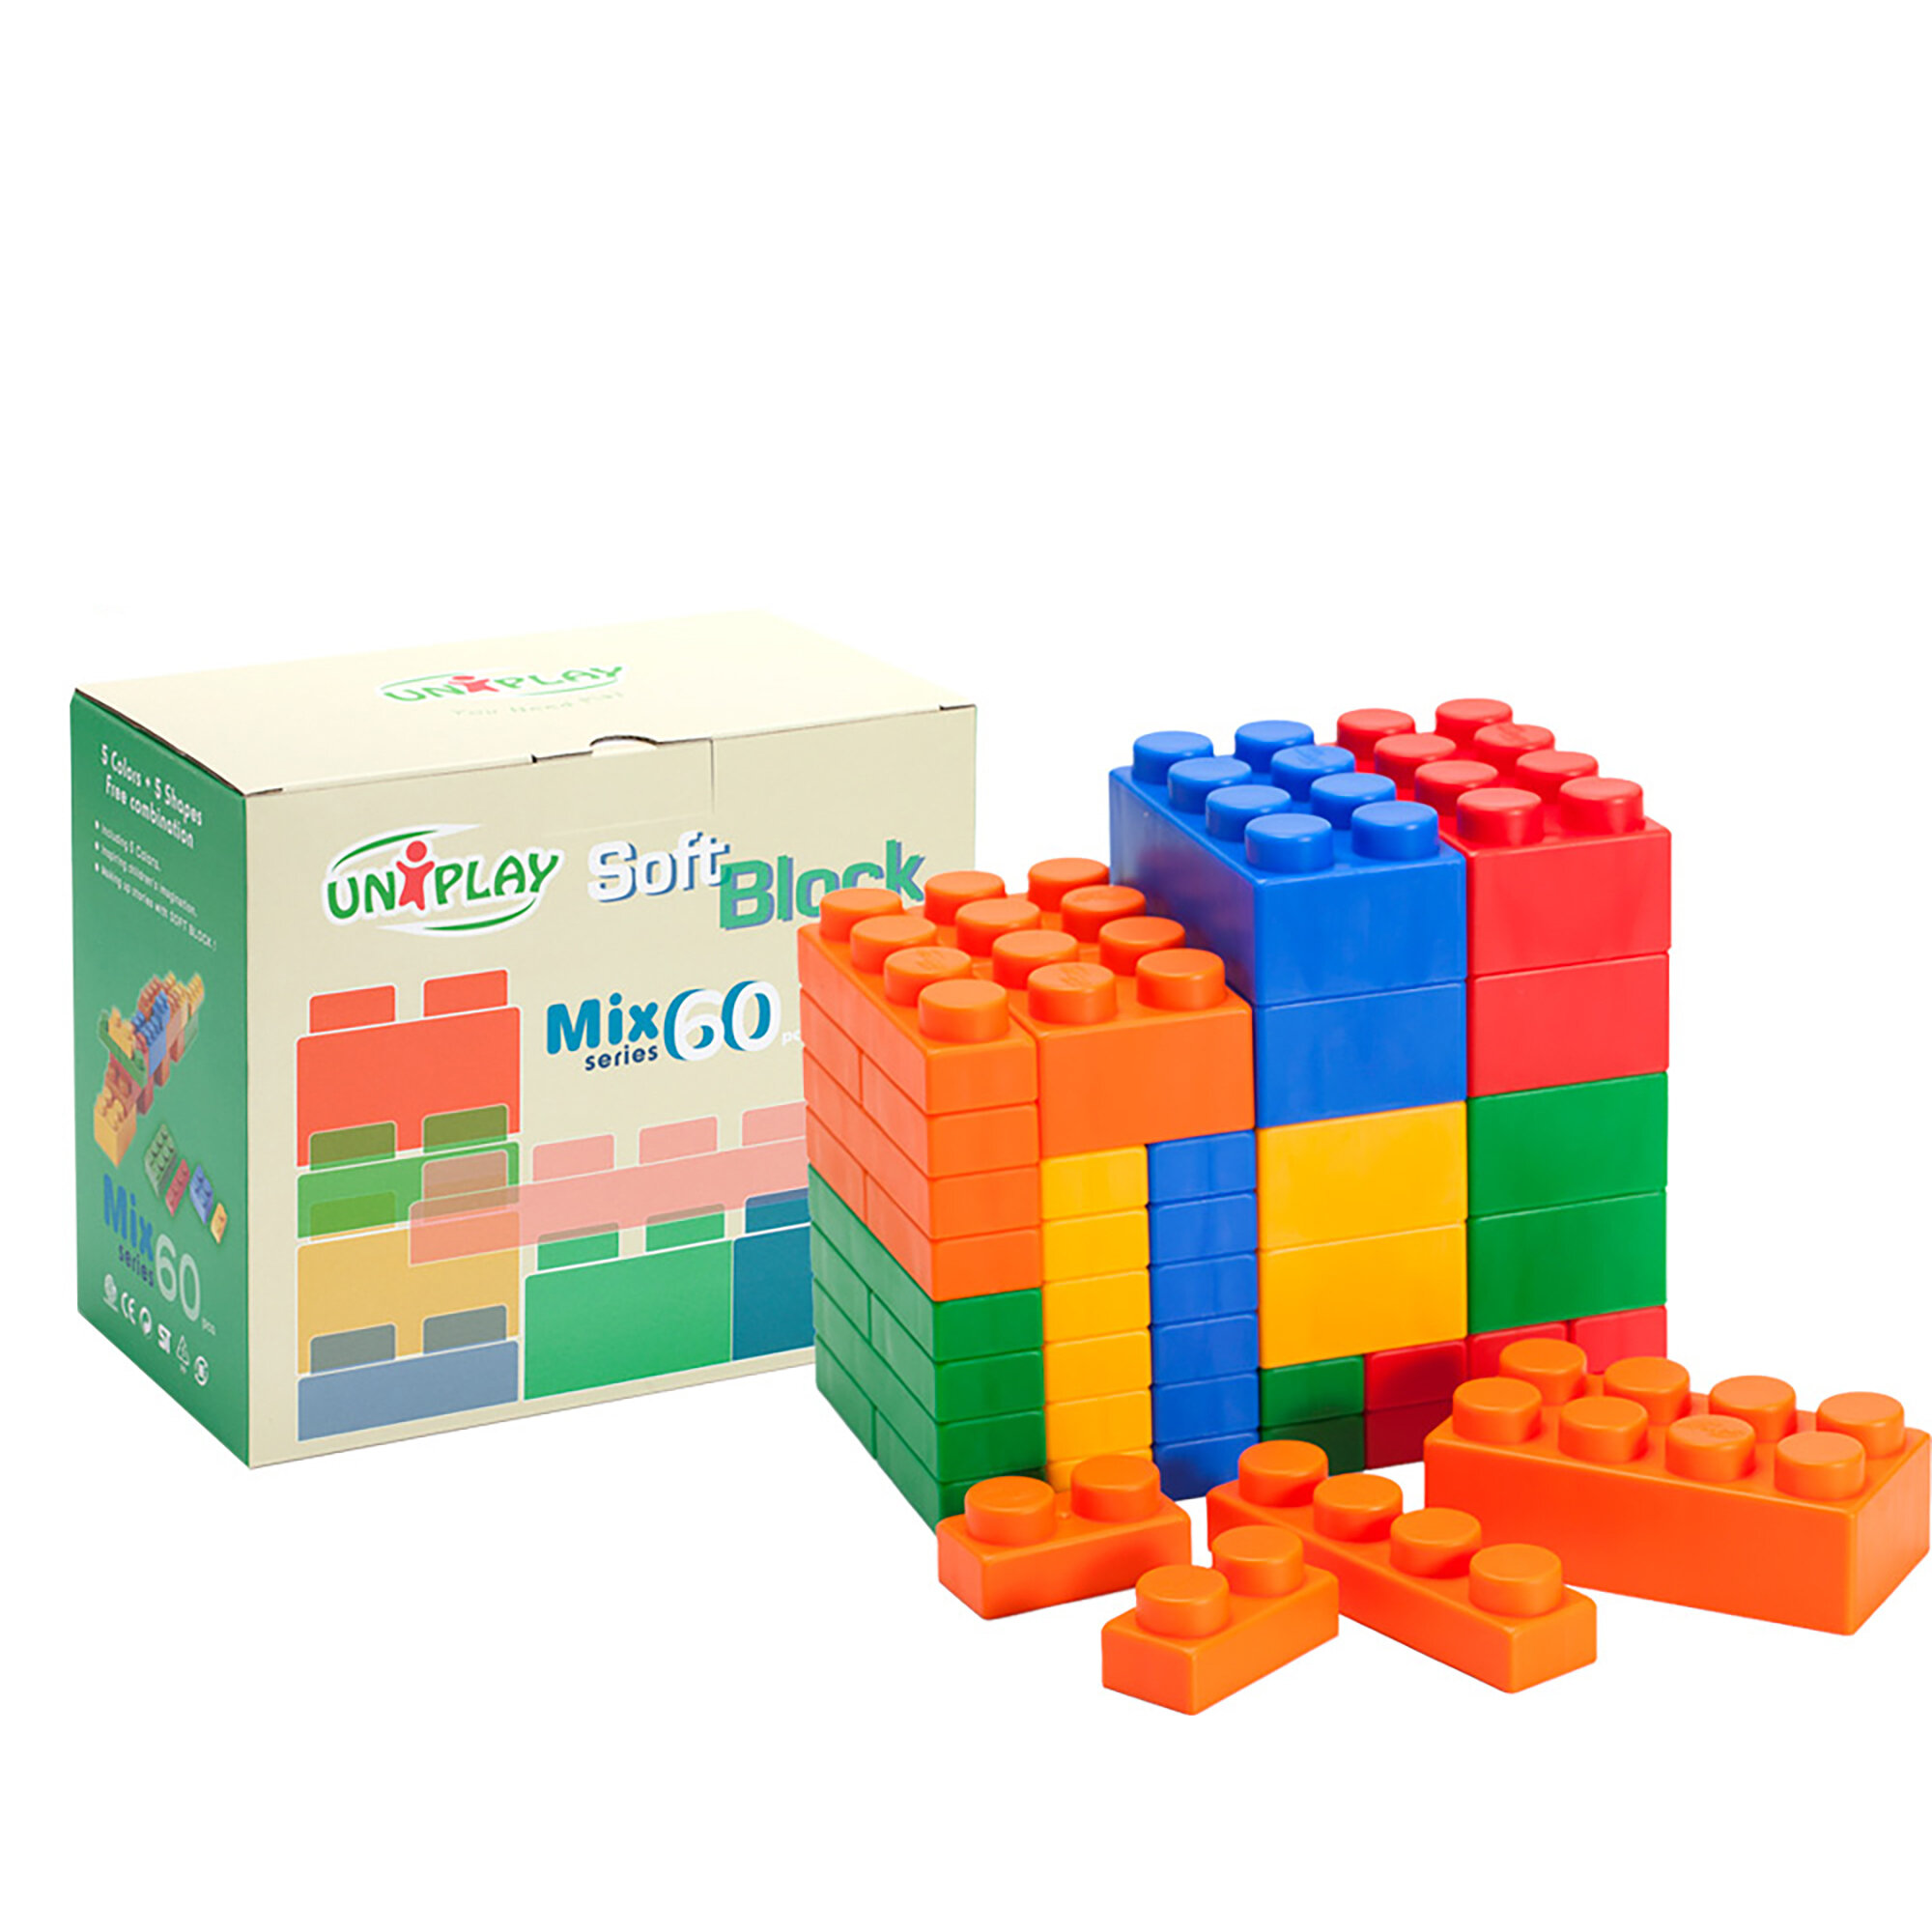 jumbo soft blocks